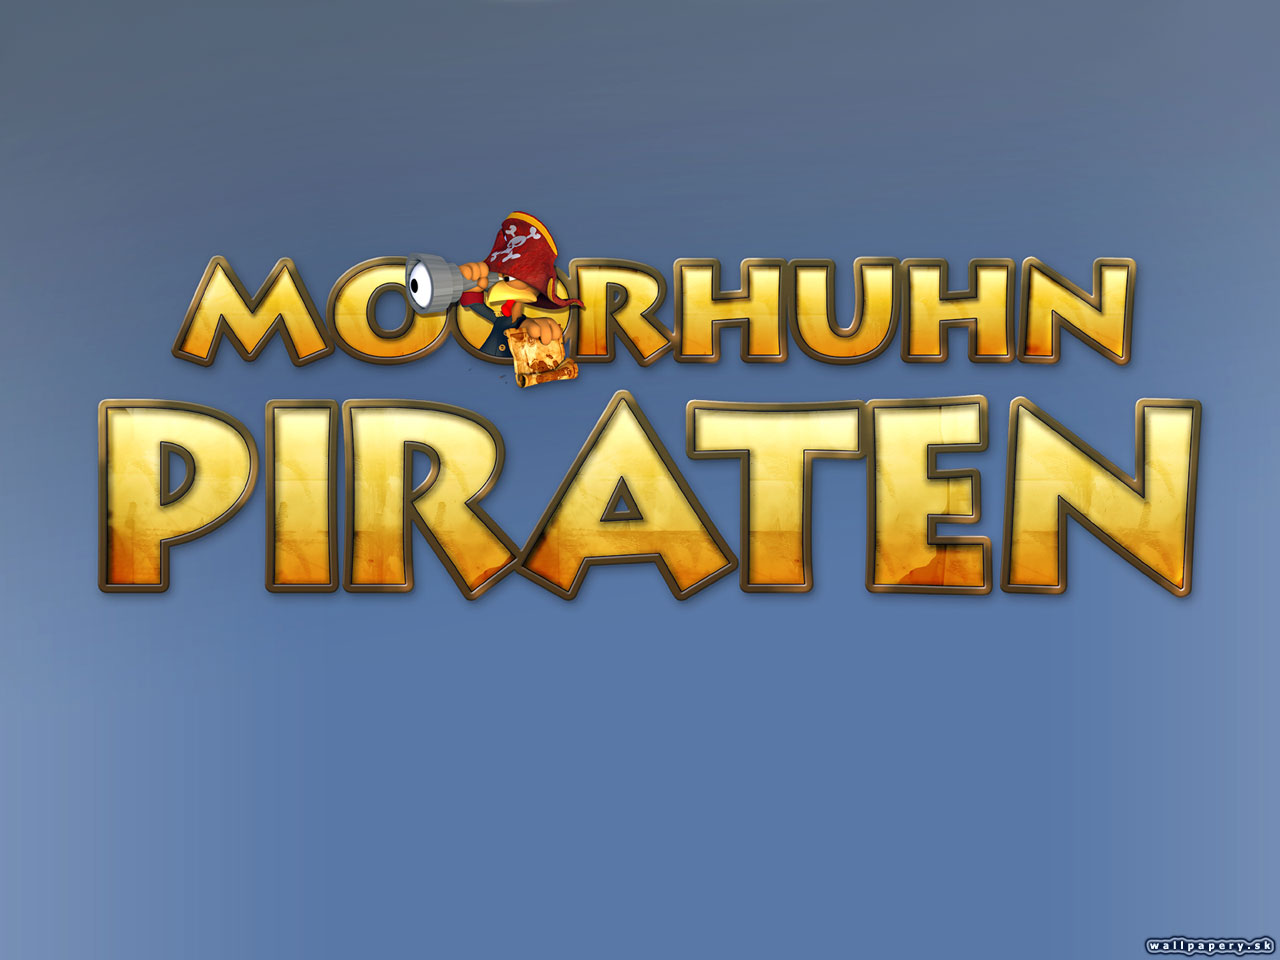 Moorhuhn Piraten - wallpaper 5